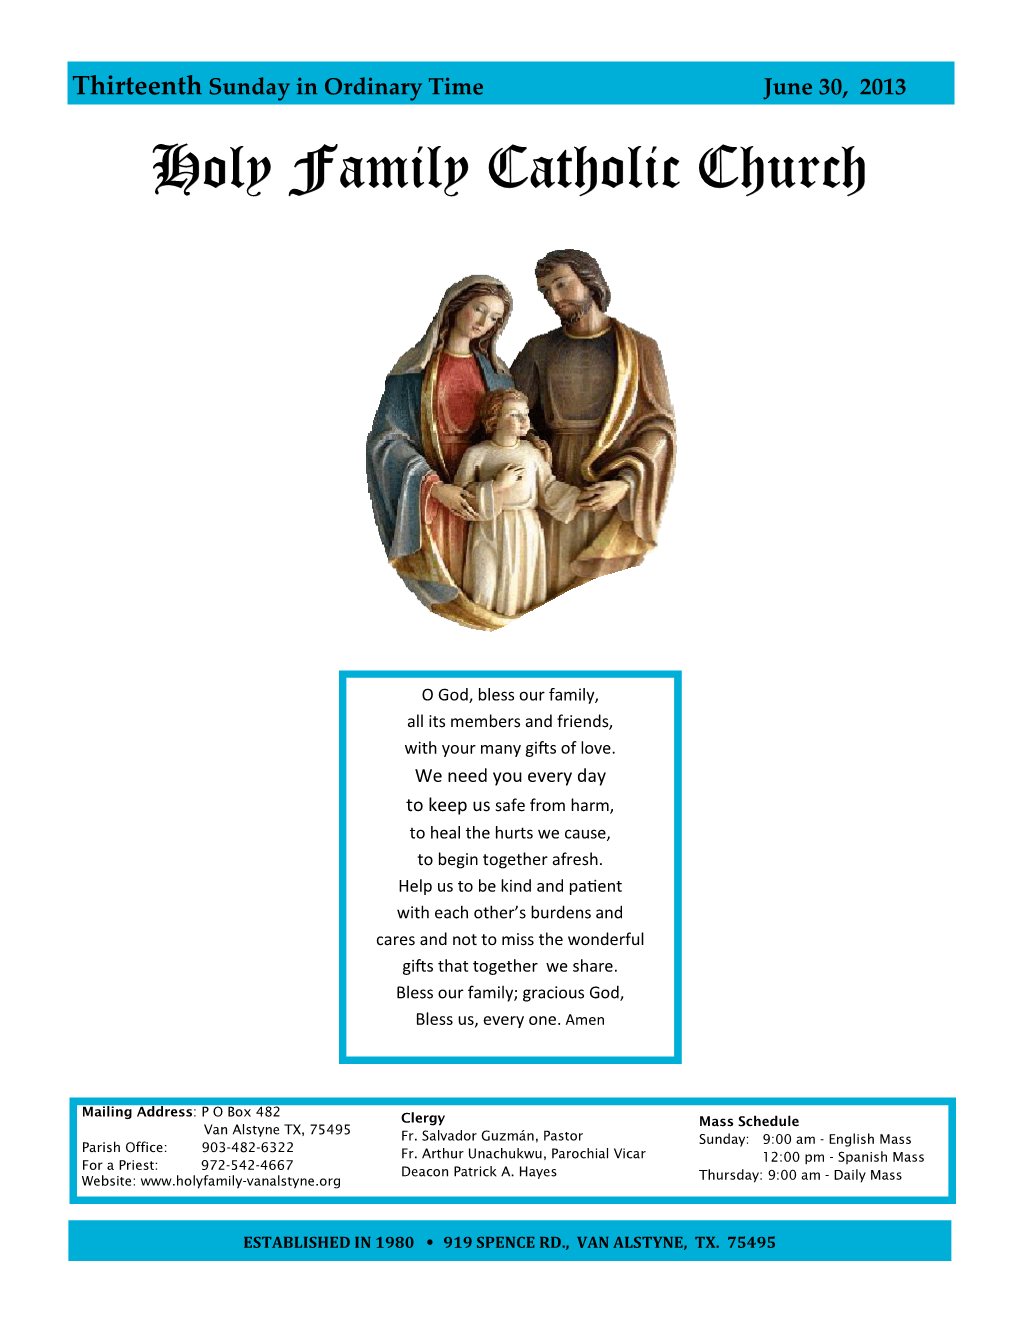 Holy Family Catholic Church | Van Alstyne, TX